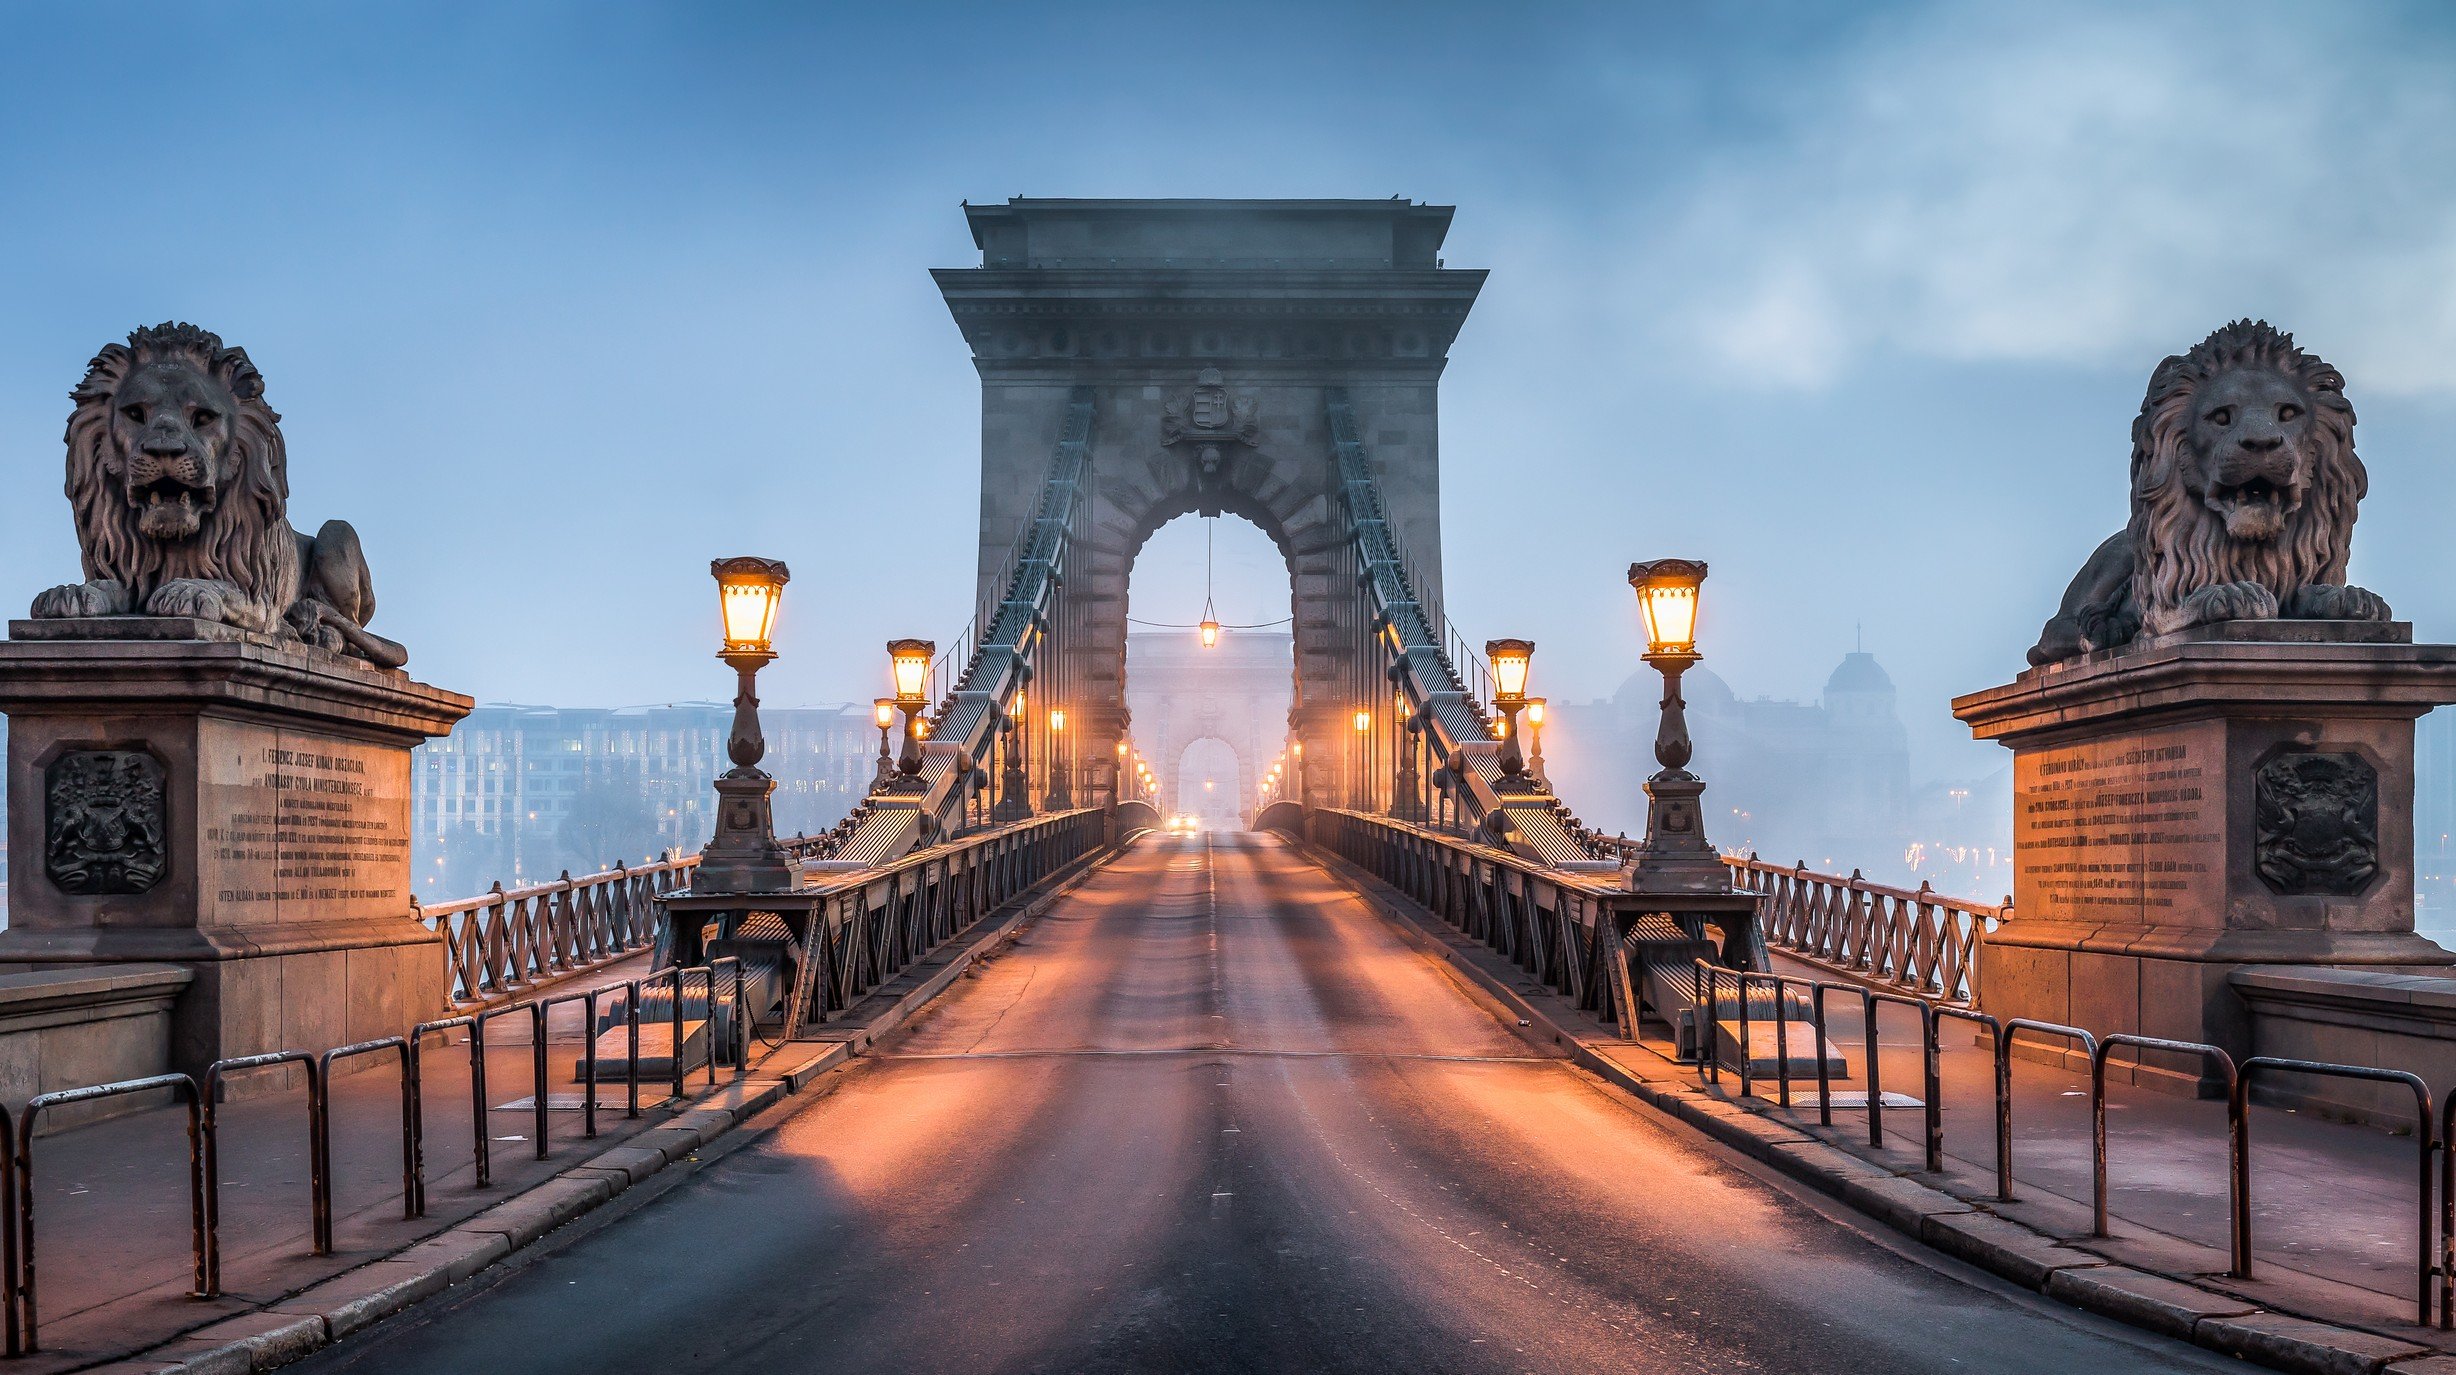 Boedapest winter - Chain Bridge